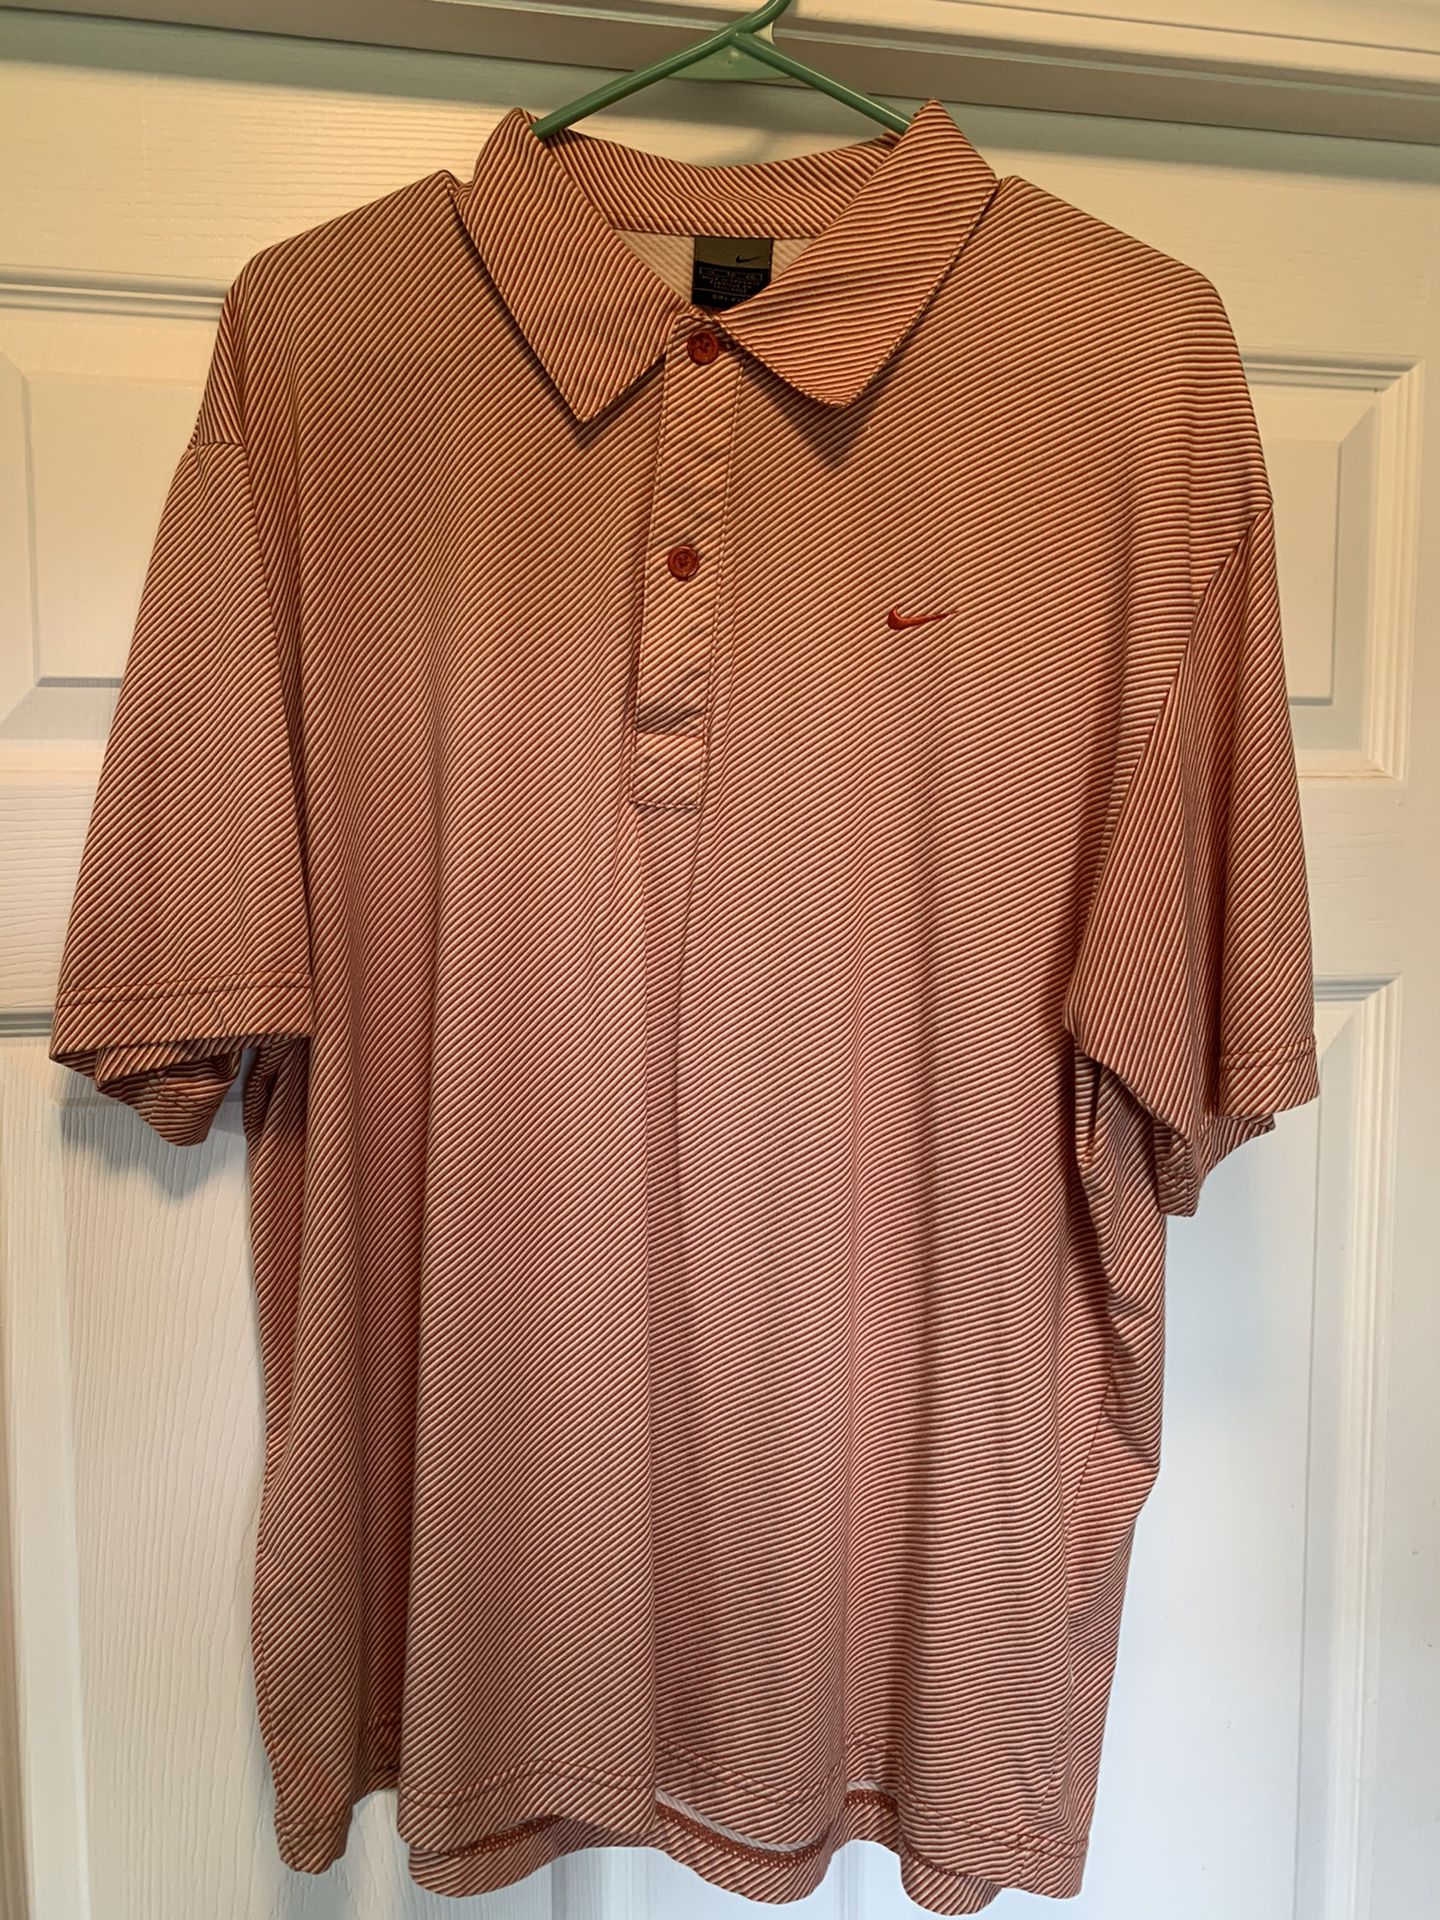 Nike golf shirt size XL